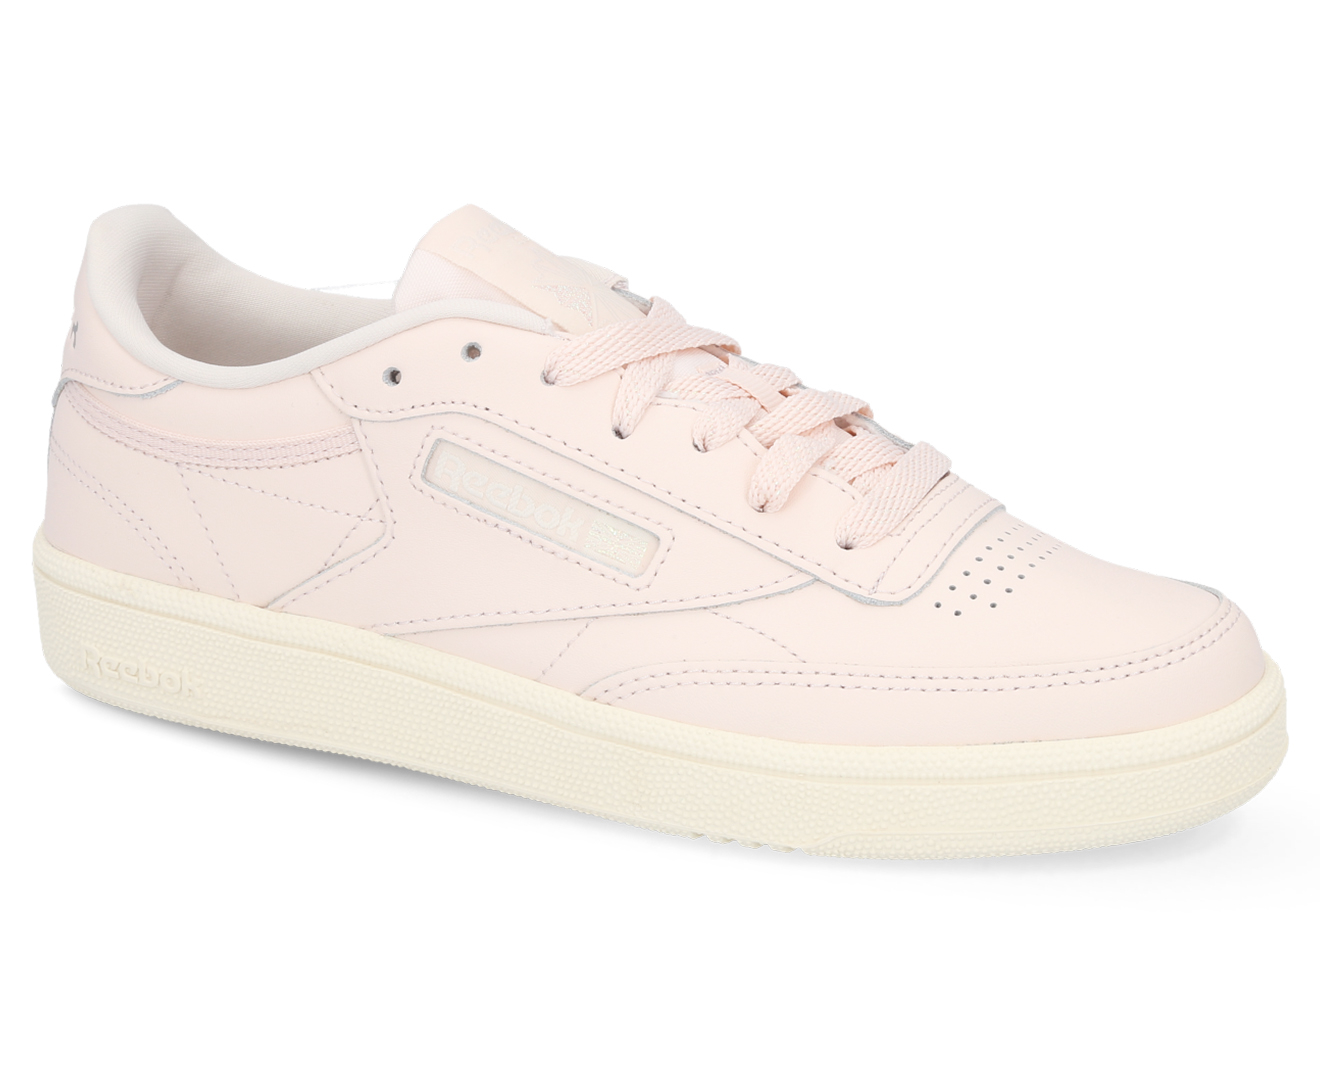 Reebok Women's Club C 85 Sneakers - Pale Pink/Chalk | Catch.com.au